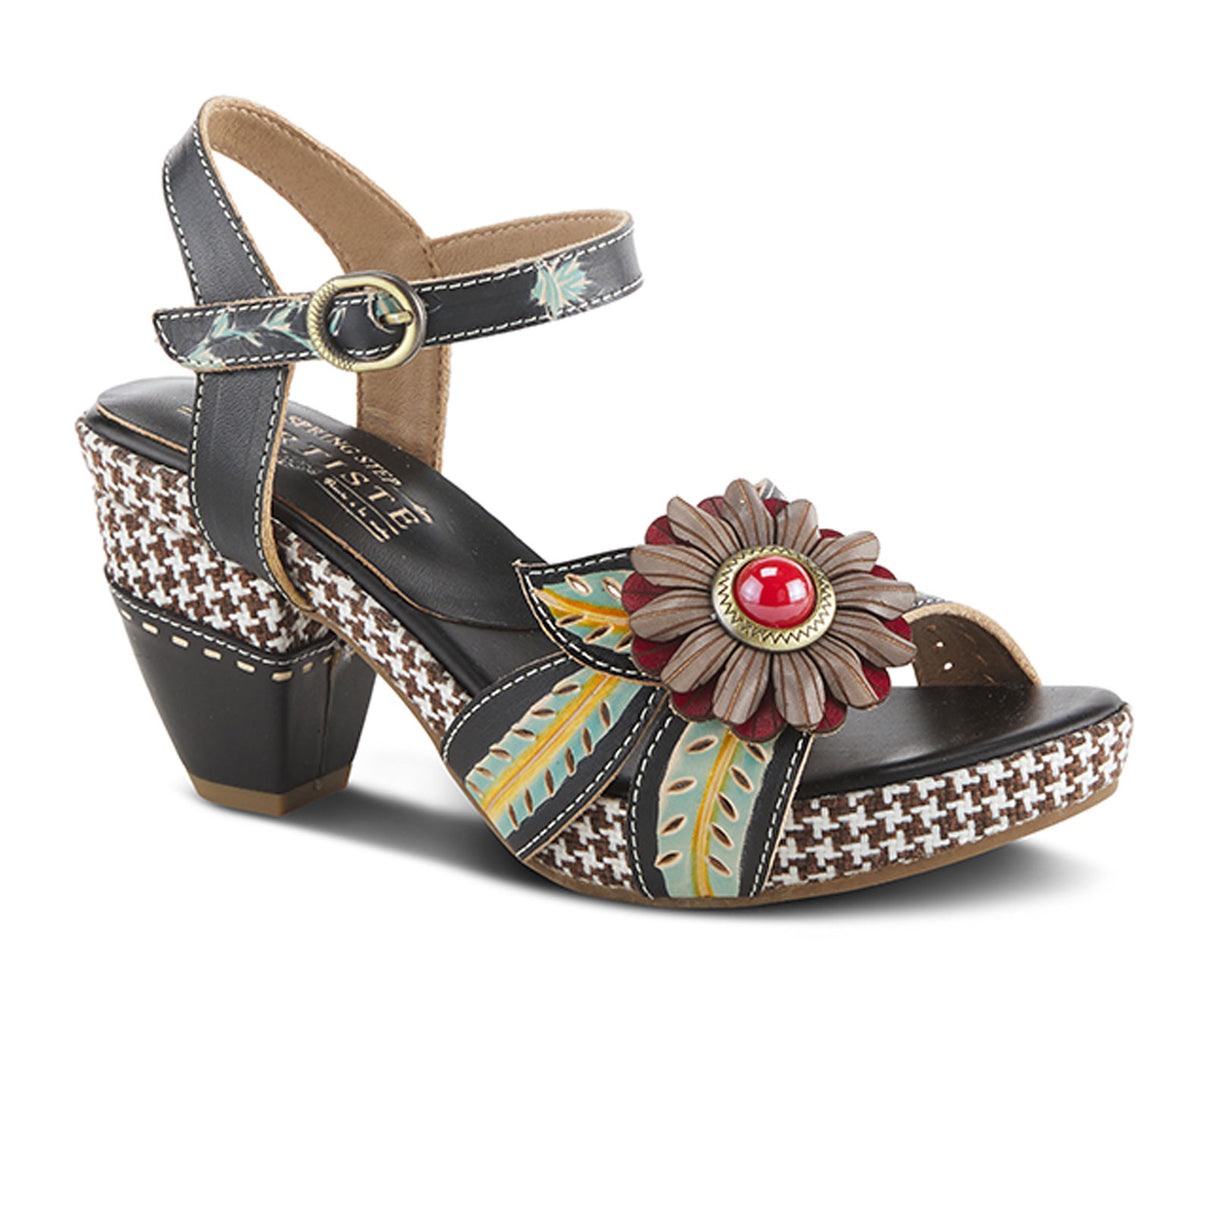 L'Artiste Astarr Heeled Sandal (Women) - Black Multi Sandals - Heeled - The Heel Shoe Fitters